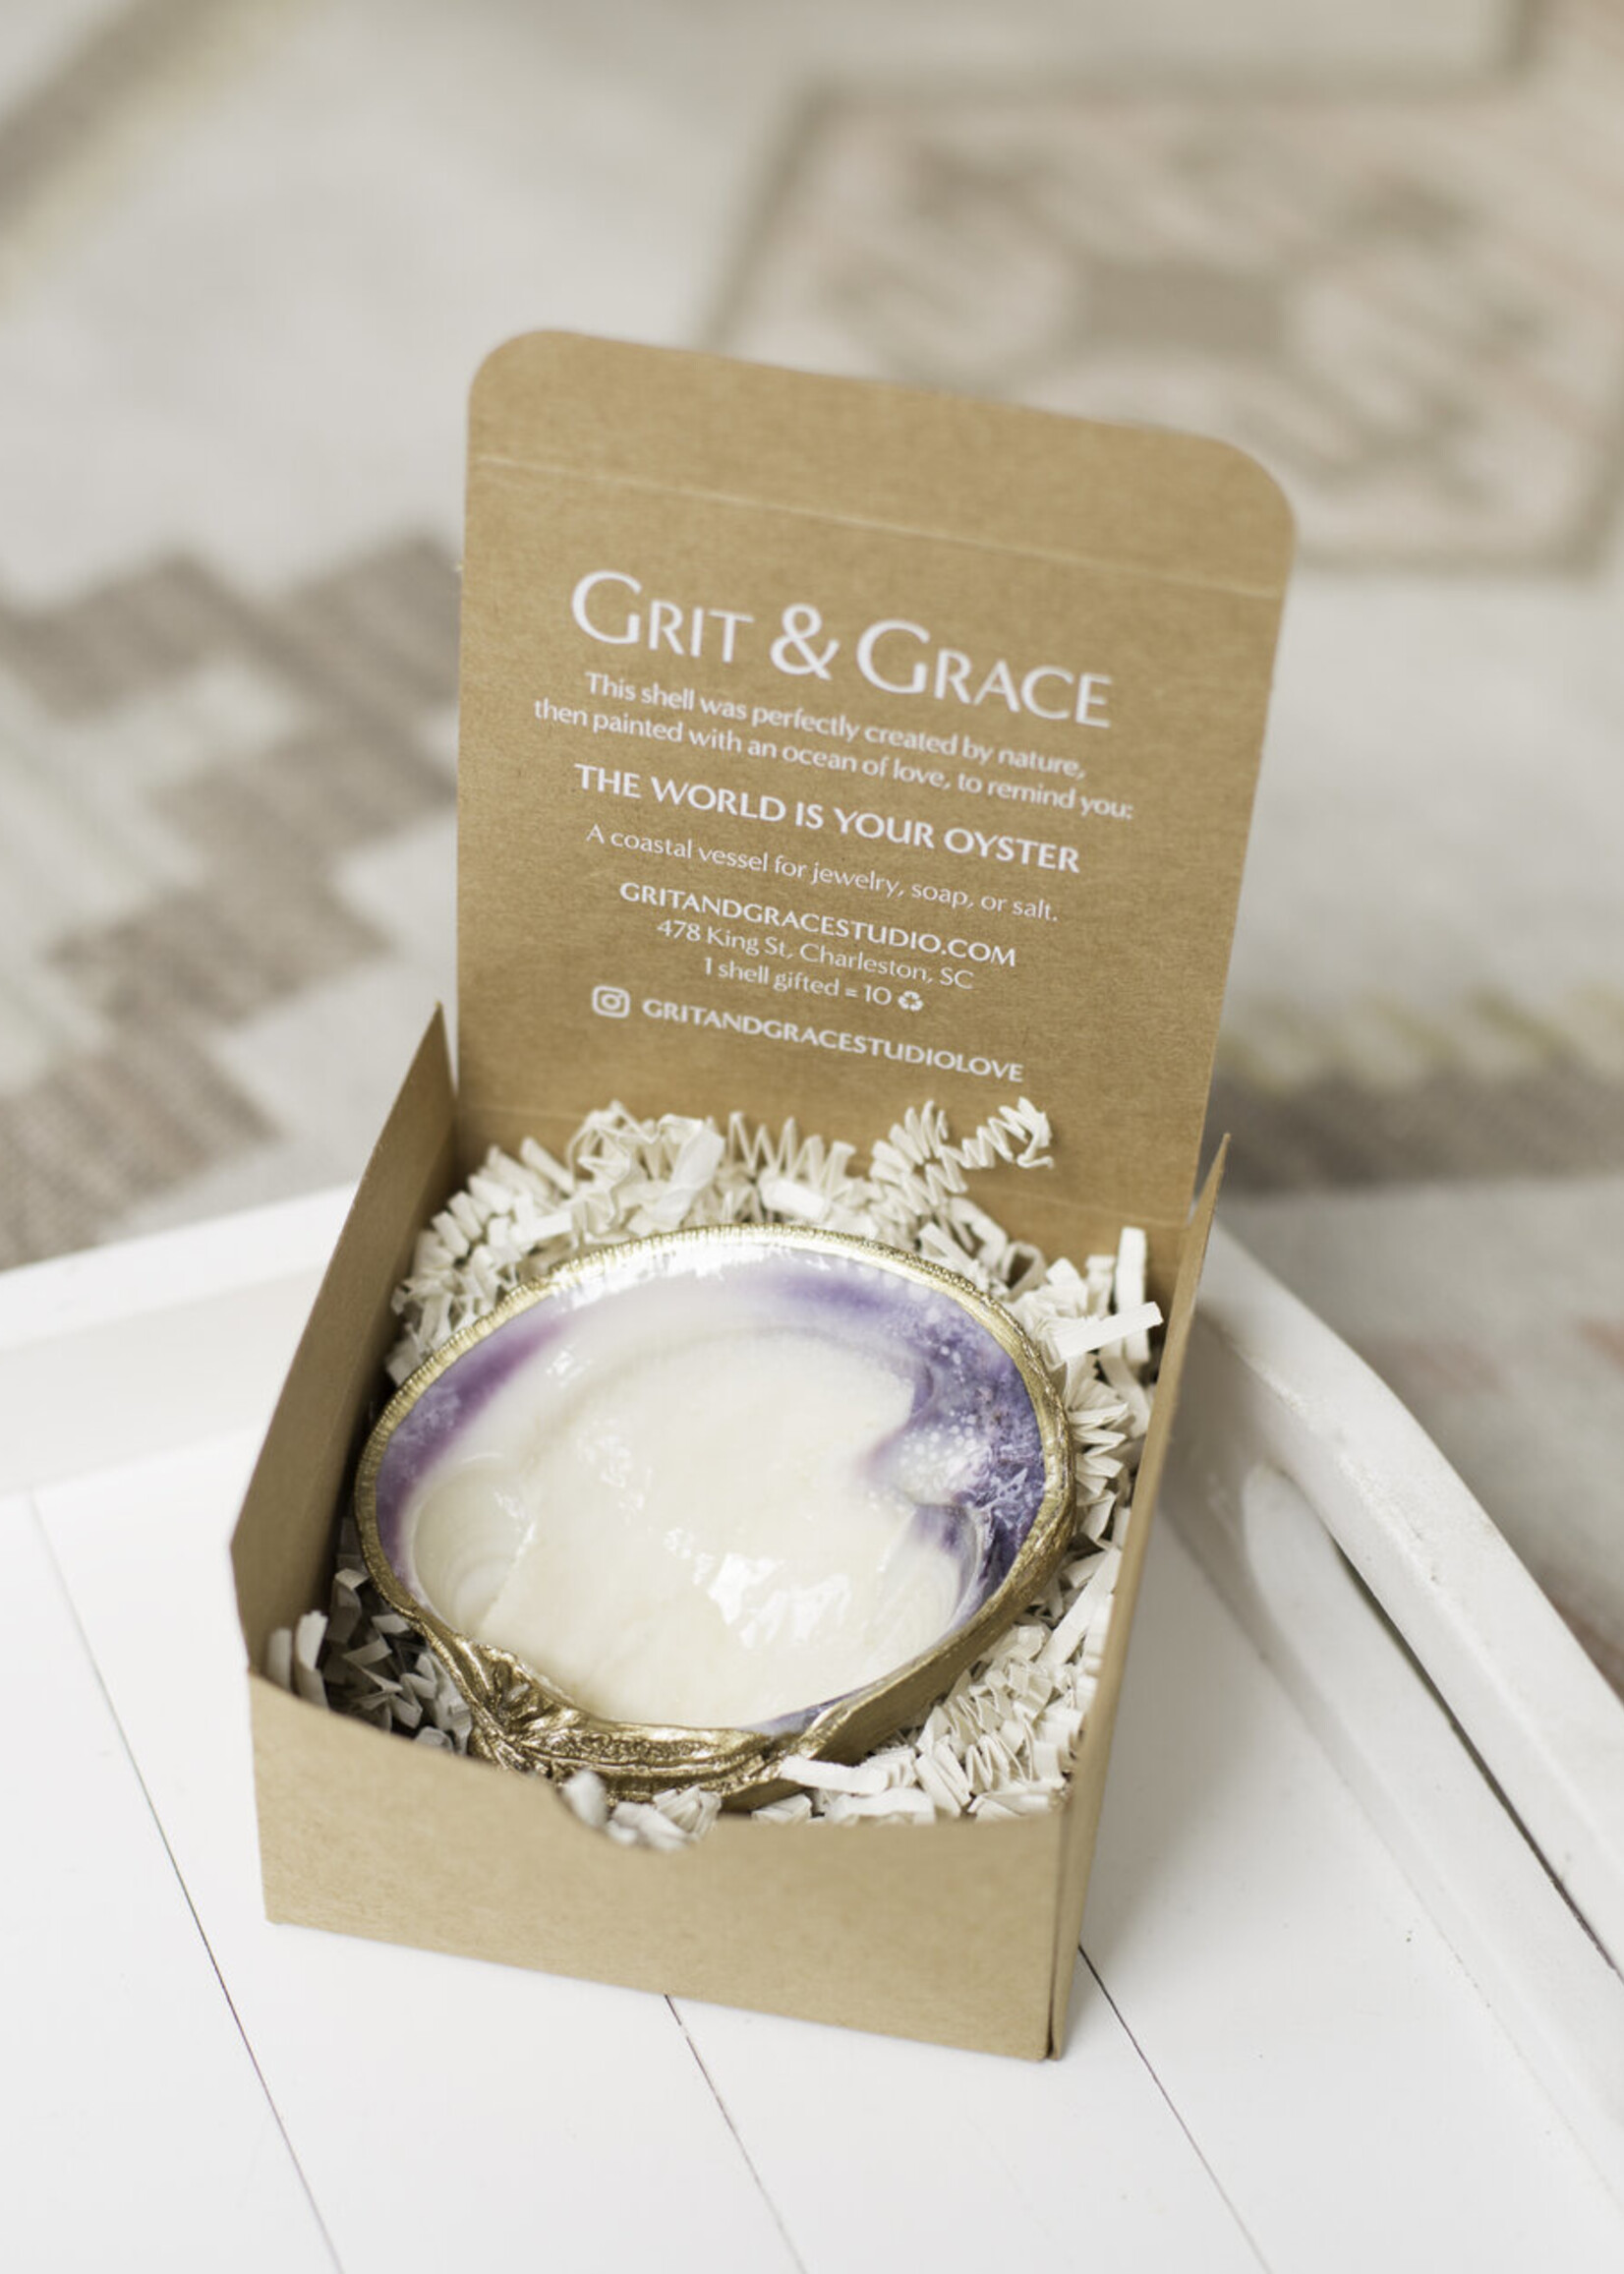 Grit & Grace Original Clam Jewelry Dish